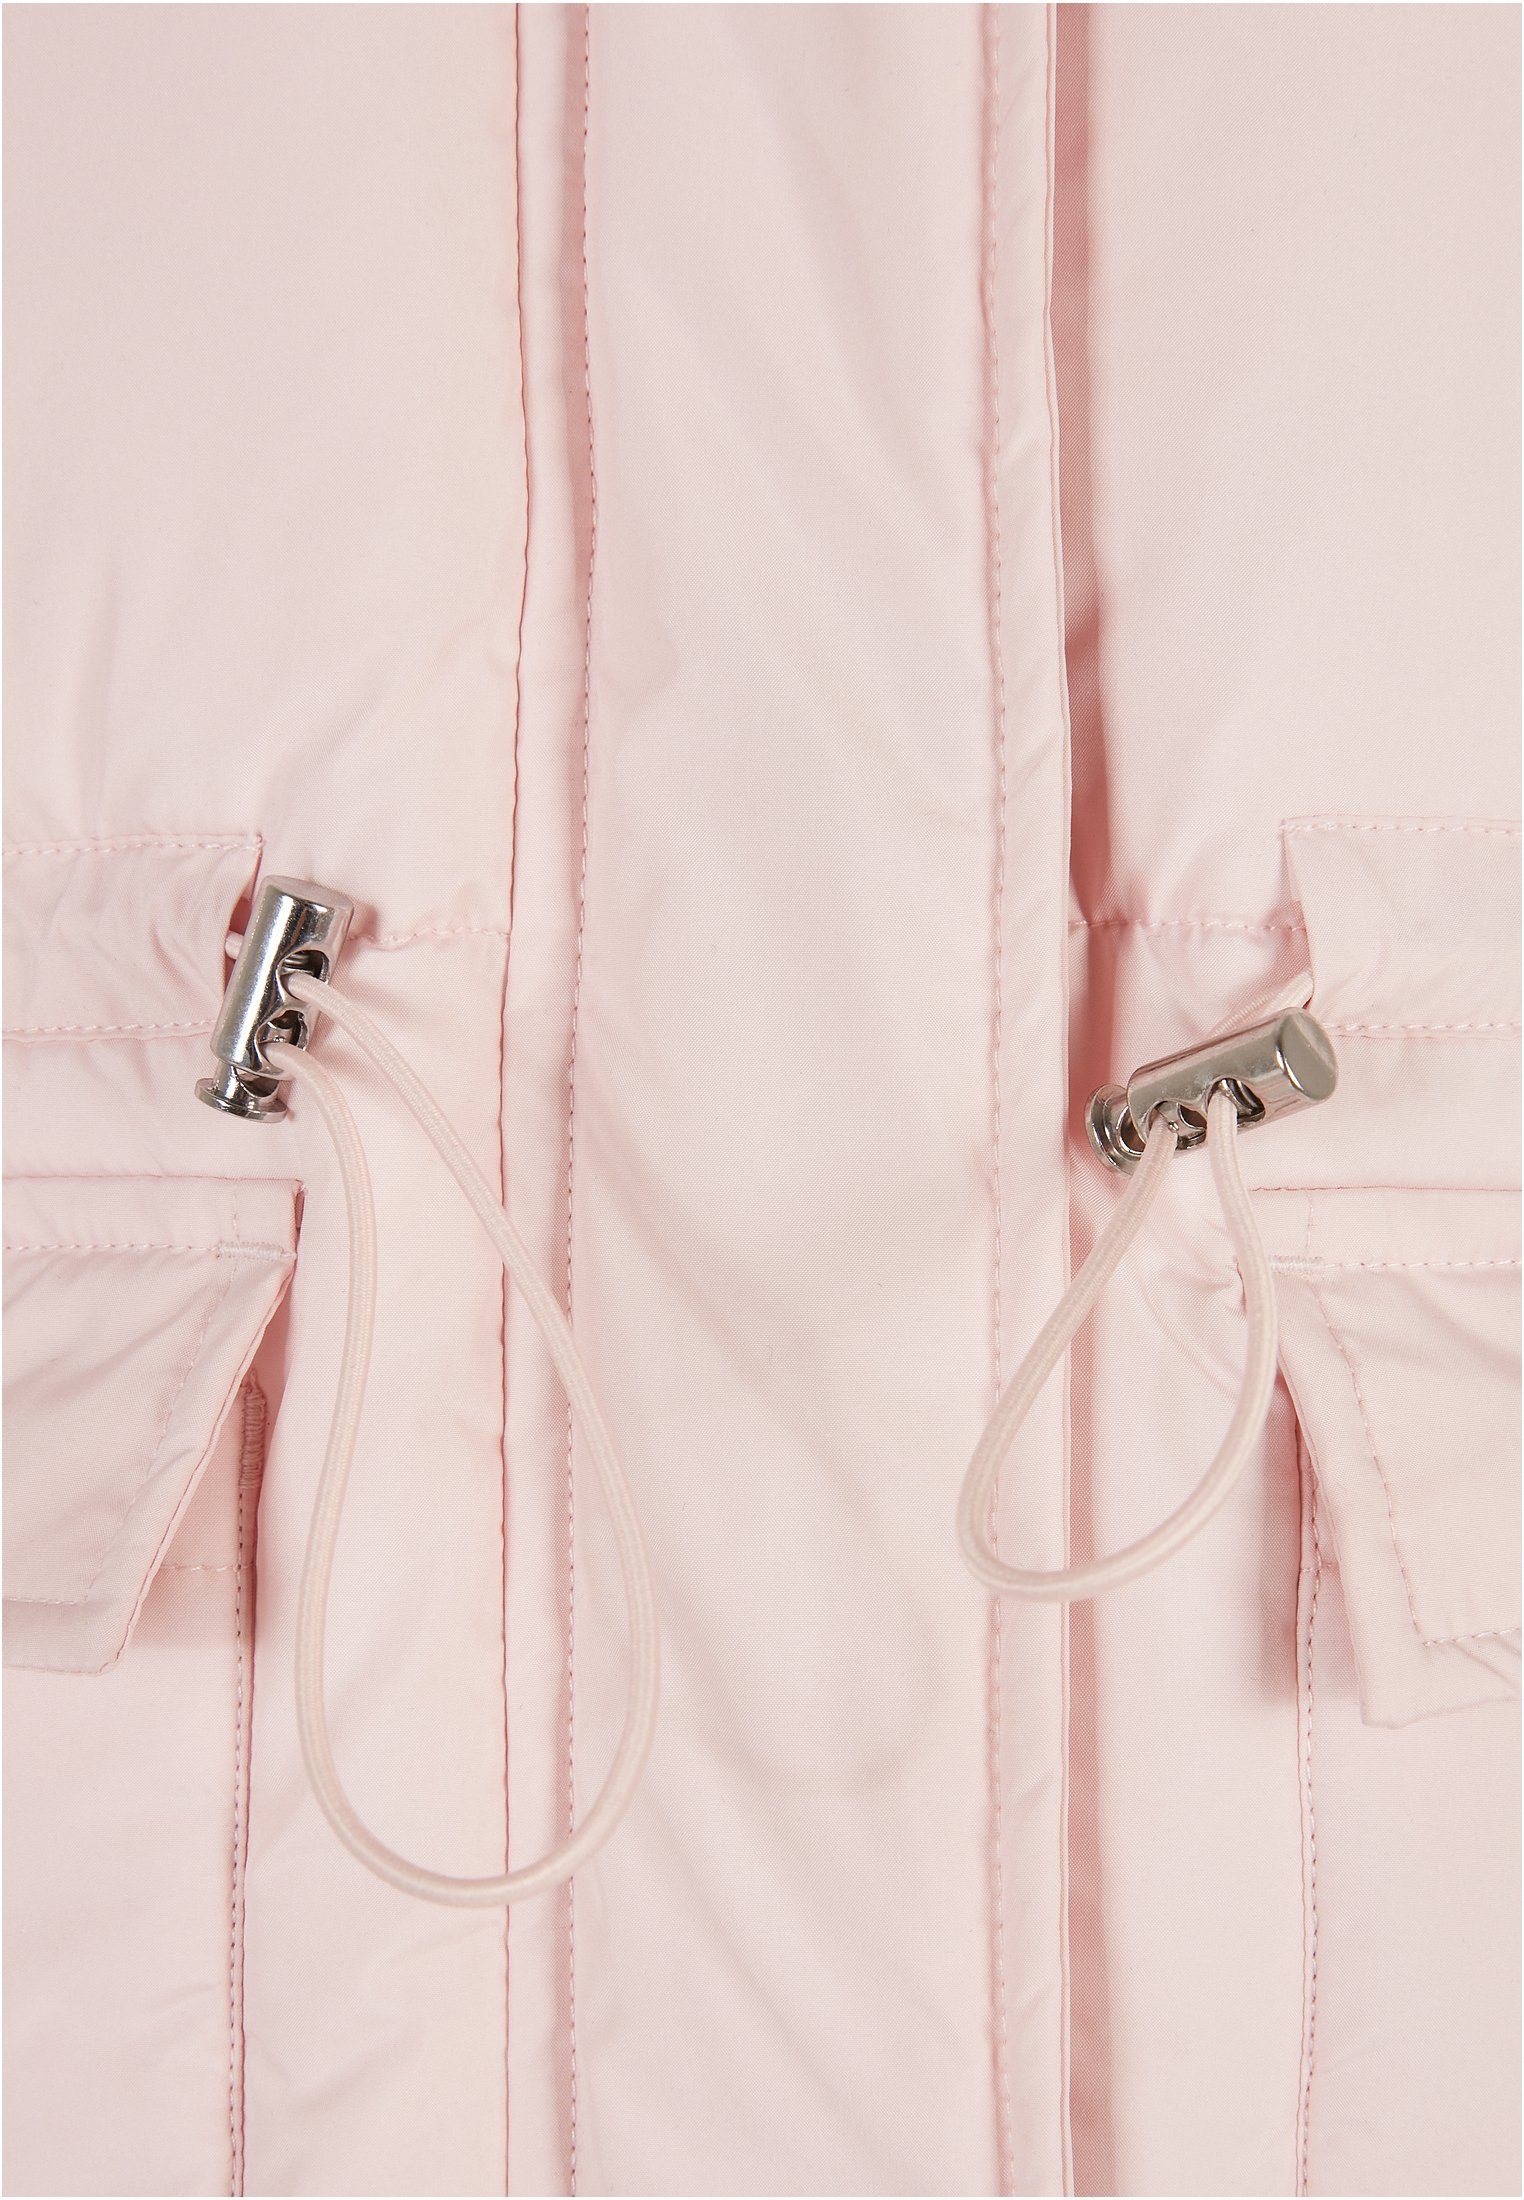 URBAN CLASSICS Winterjacke Damen Ladies Jacket Puffer Waisted pink (1-St)